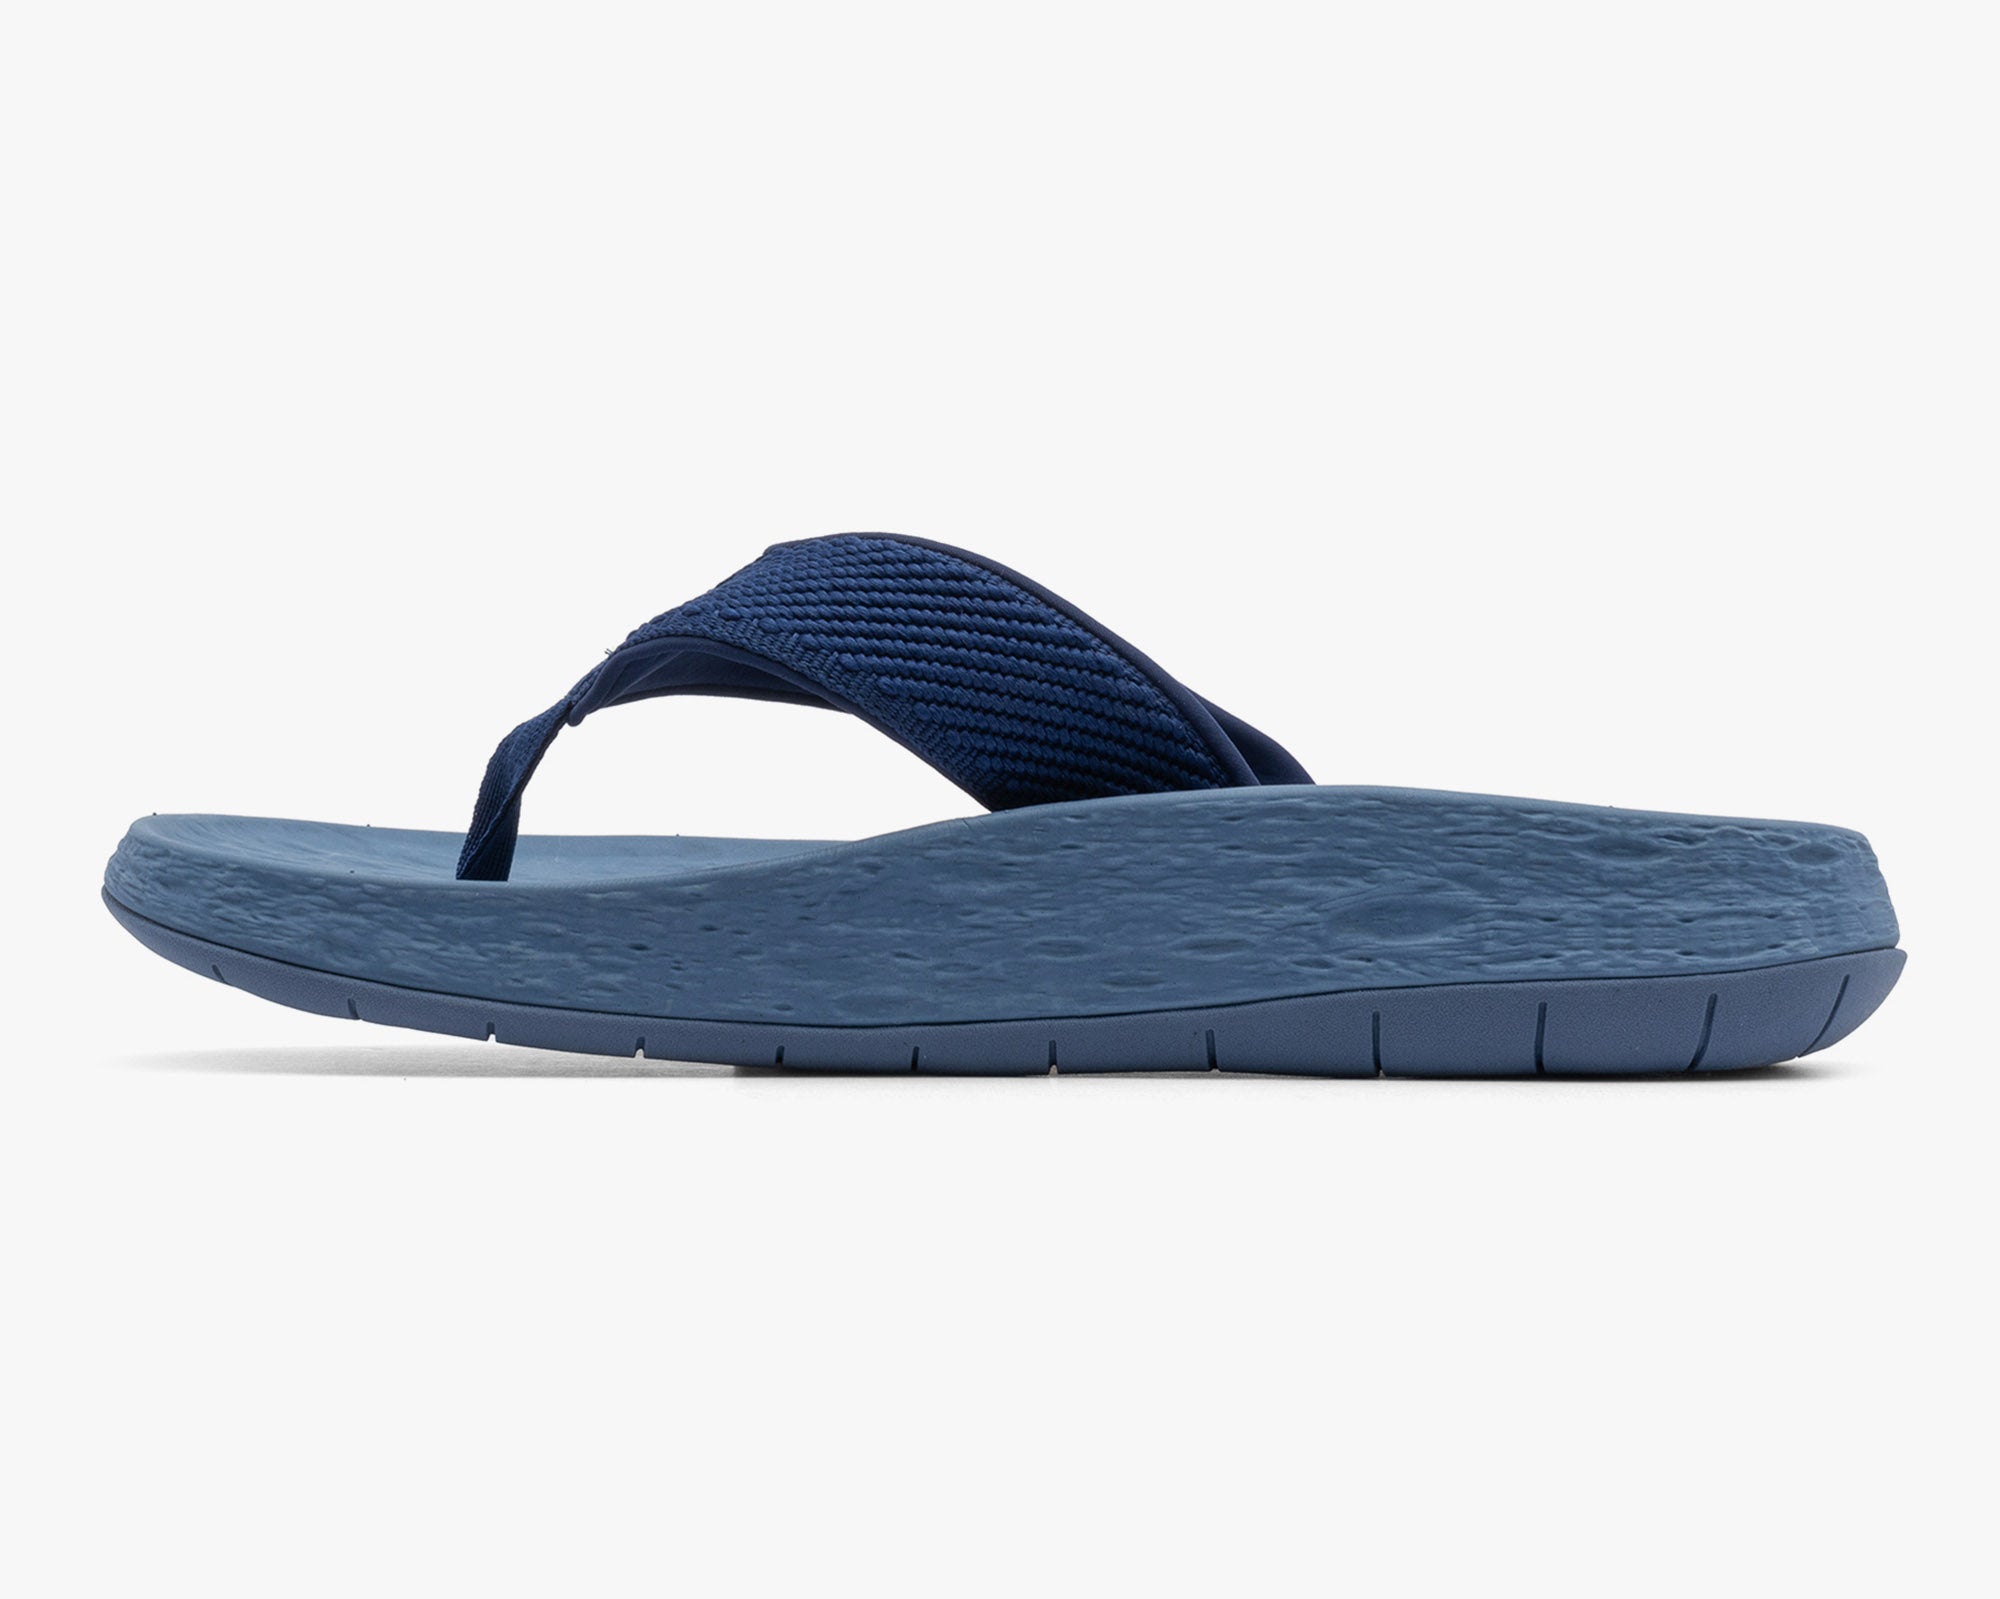 Men’s flip flops - klly sandals blue moon?